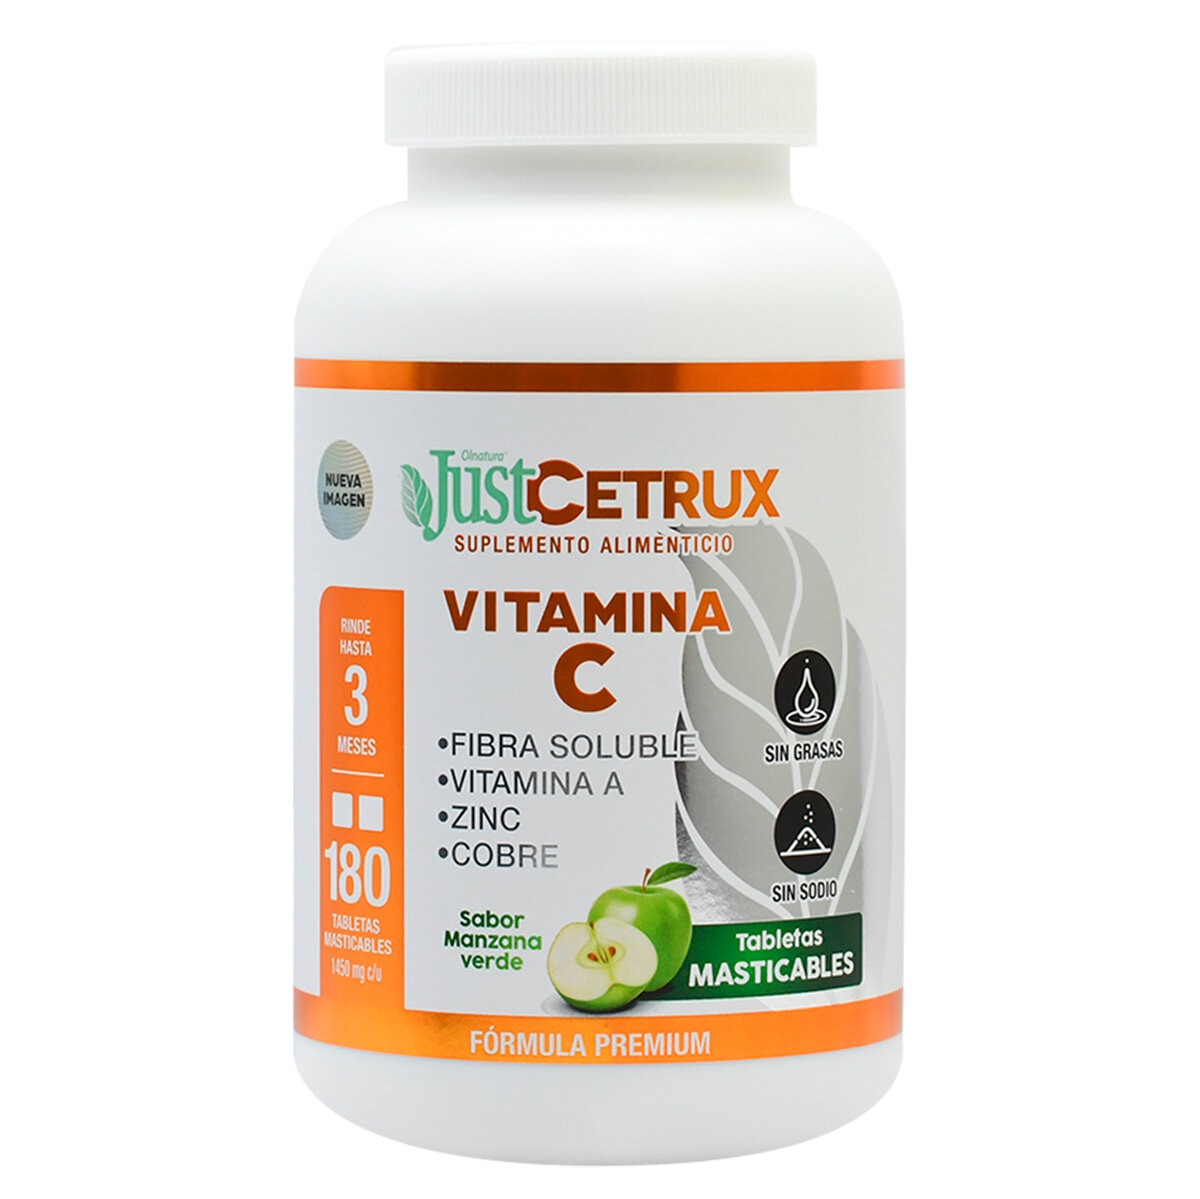 JustCetrux Vitamina C, Fibra Soluble, Zinc y Cobre Frasco con 180 Tabletas de 1450mg c/u